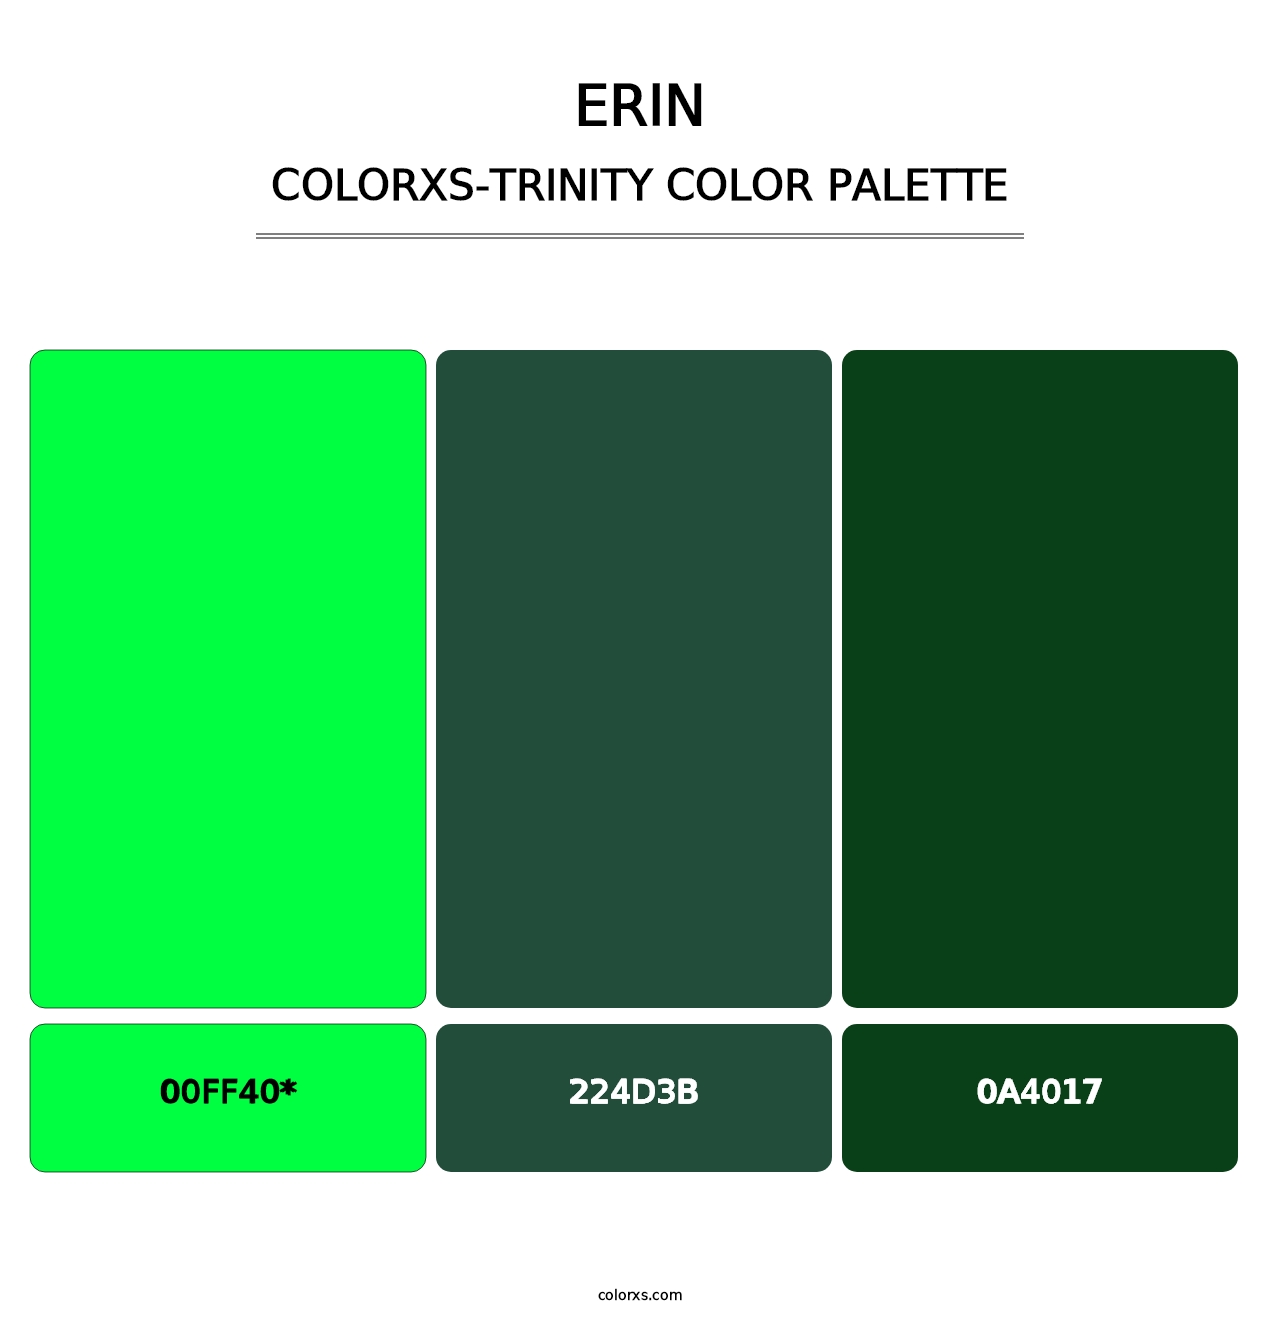 Erin - Colorxs Trinity Palette